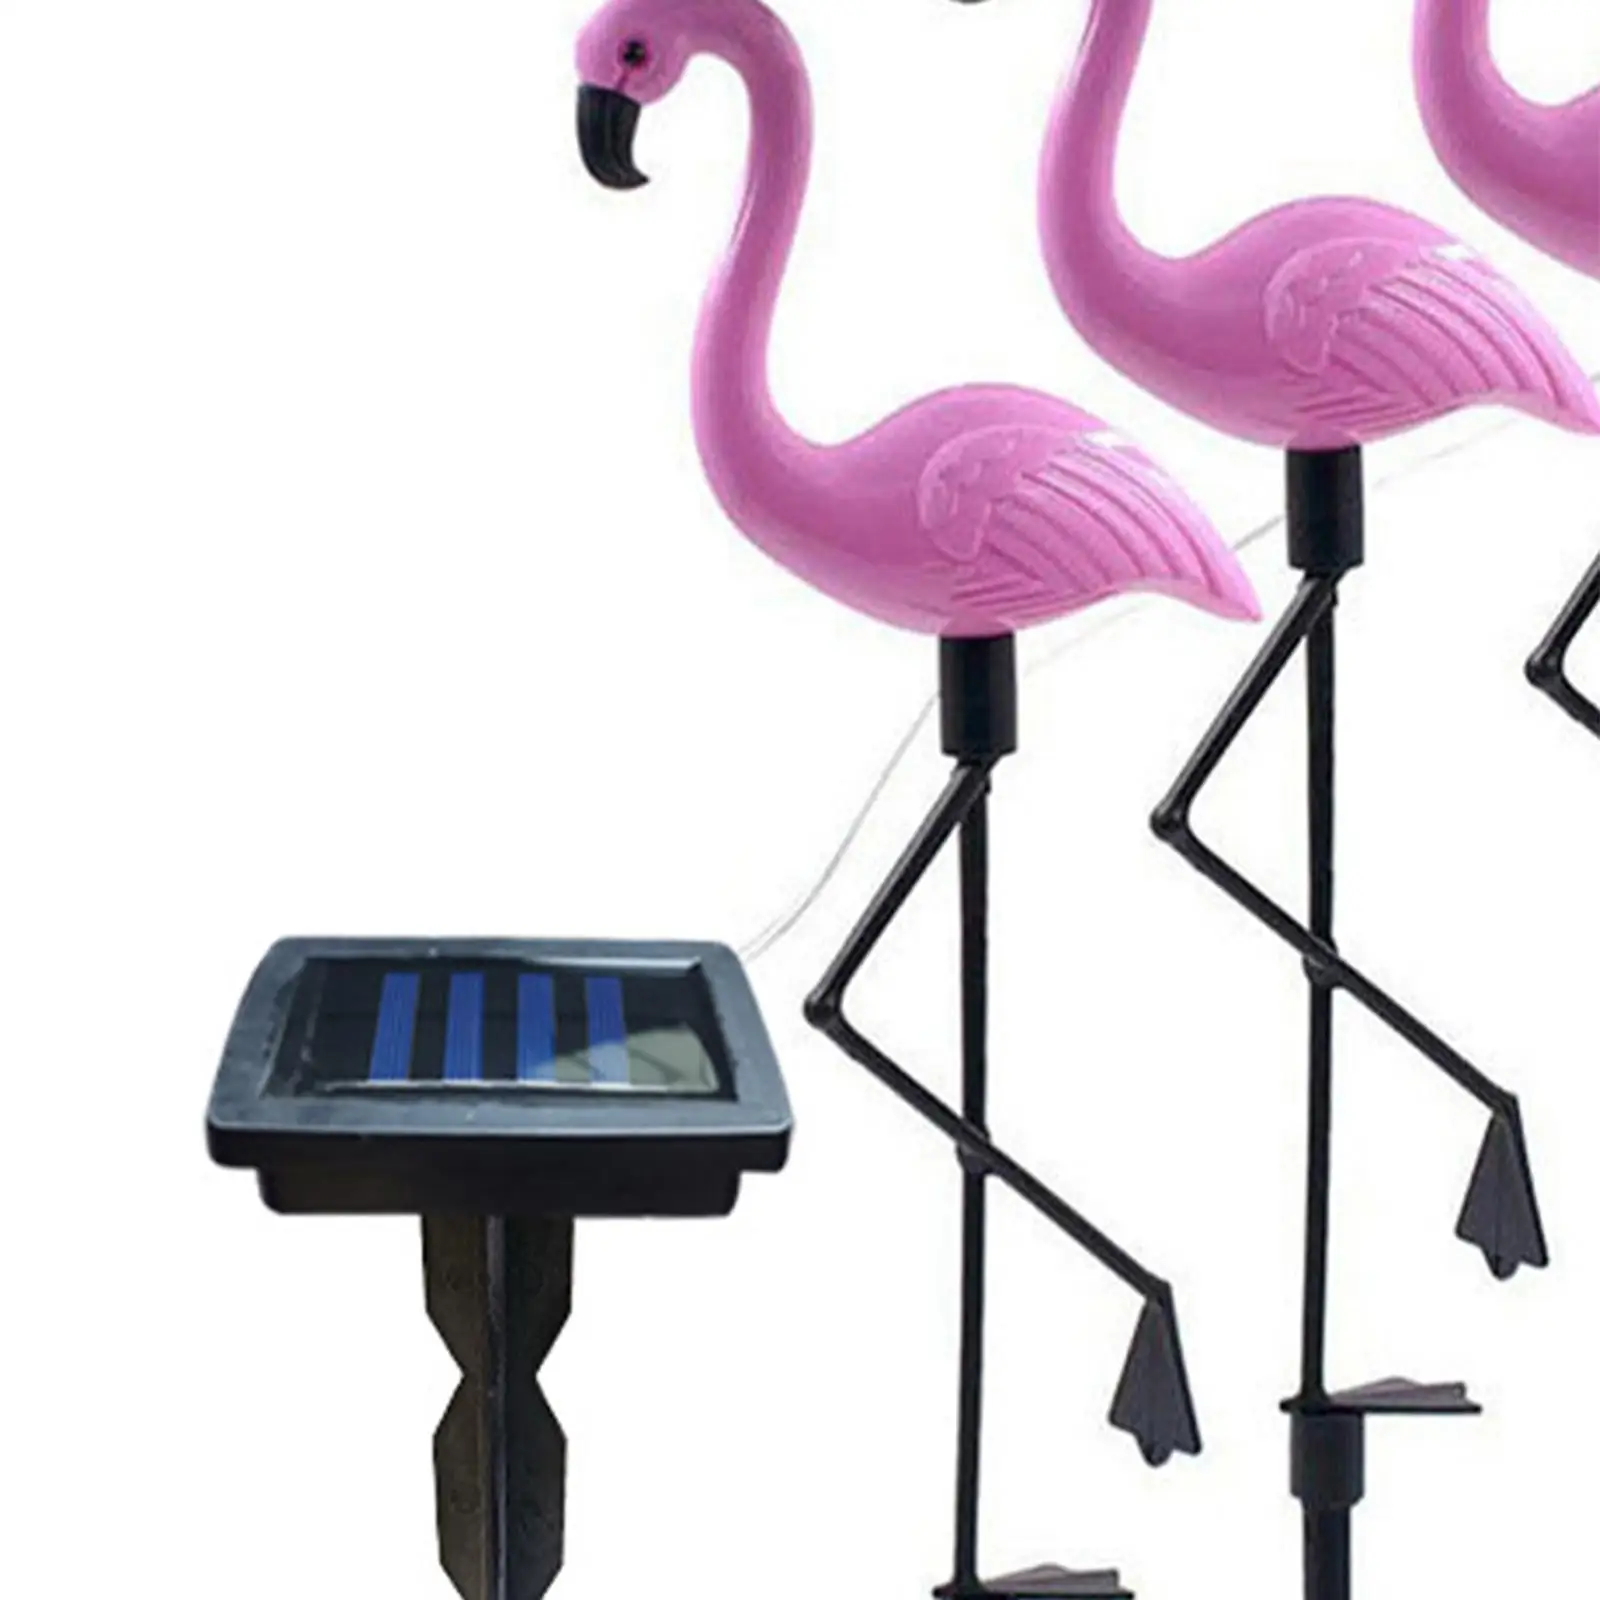 3 Pieces Flamingo Landscape Light Solar Power for Outdoor Patio Christams